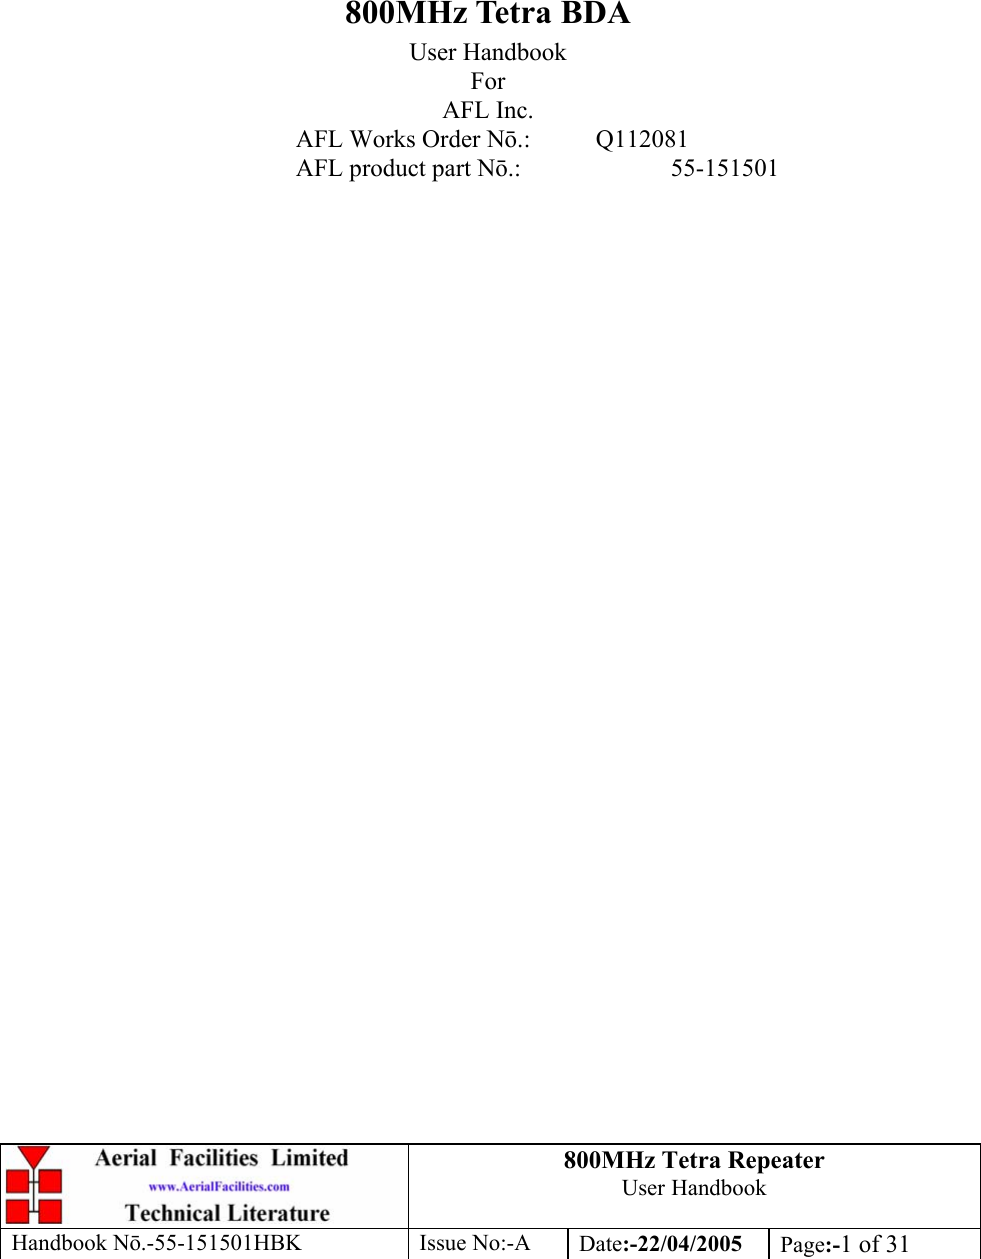 800MHz Tetra Repeater User Handbook Handbook Nō.-55-151501HBK Issue No:-A Date:-22/04/2005  Page:-1 of 31          800MHz Tetra BDA User Handbook For AFL Inc. AFL Works Order Nō.: Q112081 AFL product part Nō.:  55-151501 